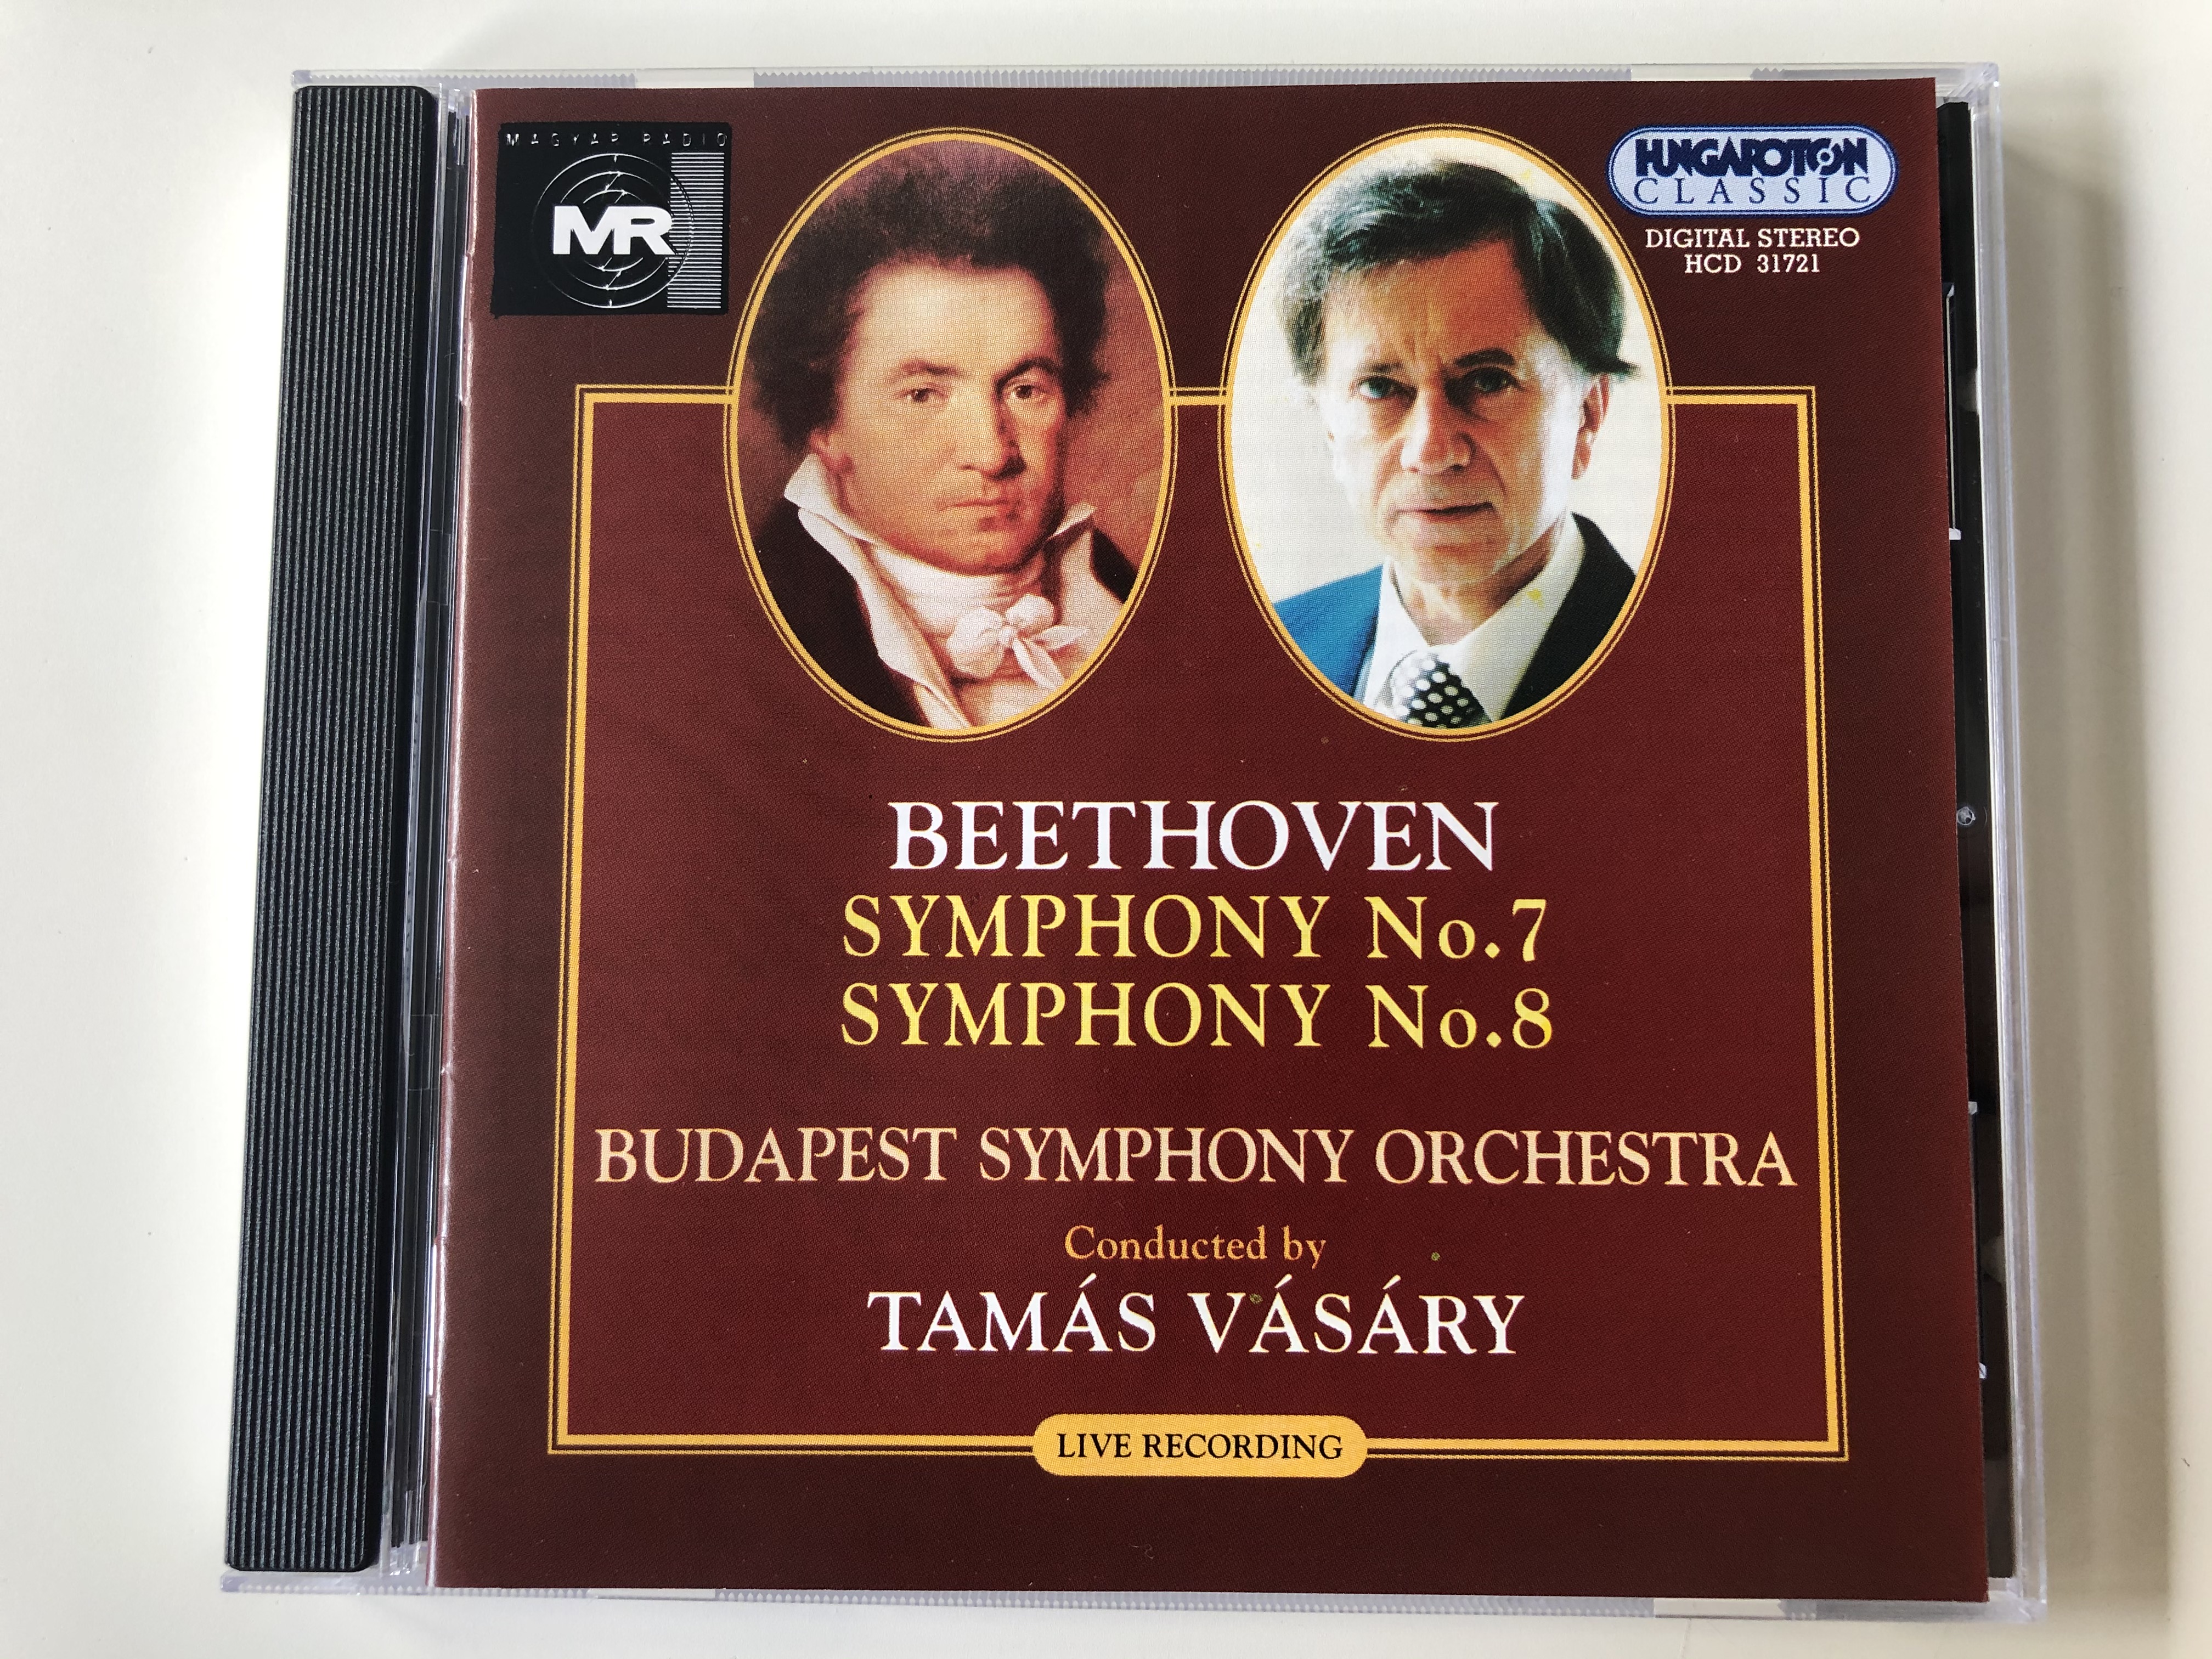 beethoven-symphony-no.-7-symphony-no.-8-budapest-symphony-orchestra-conducted-by-tamas-vasary-hungaroton-classic-audio-cd-1997-stereo-hcd-31721-1-.jpg